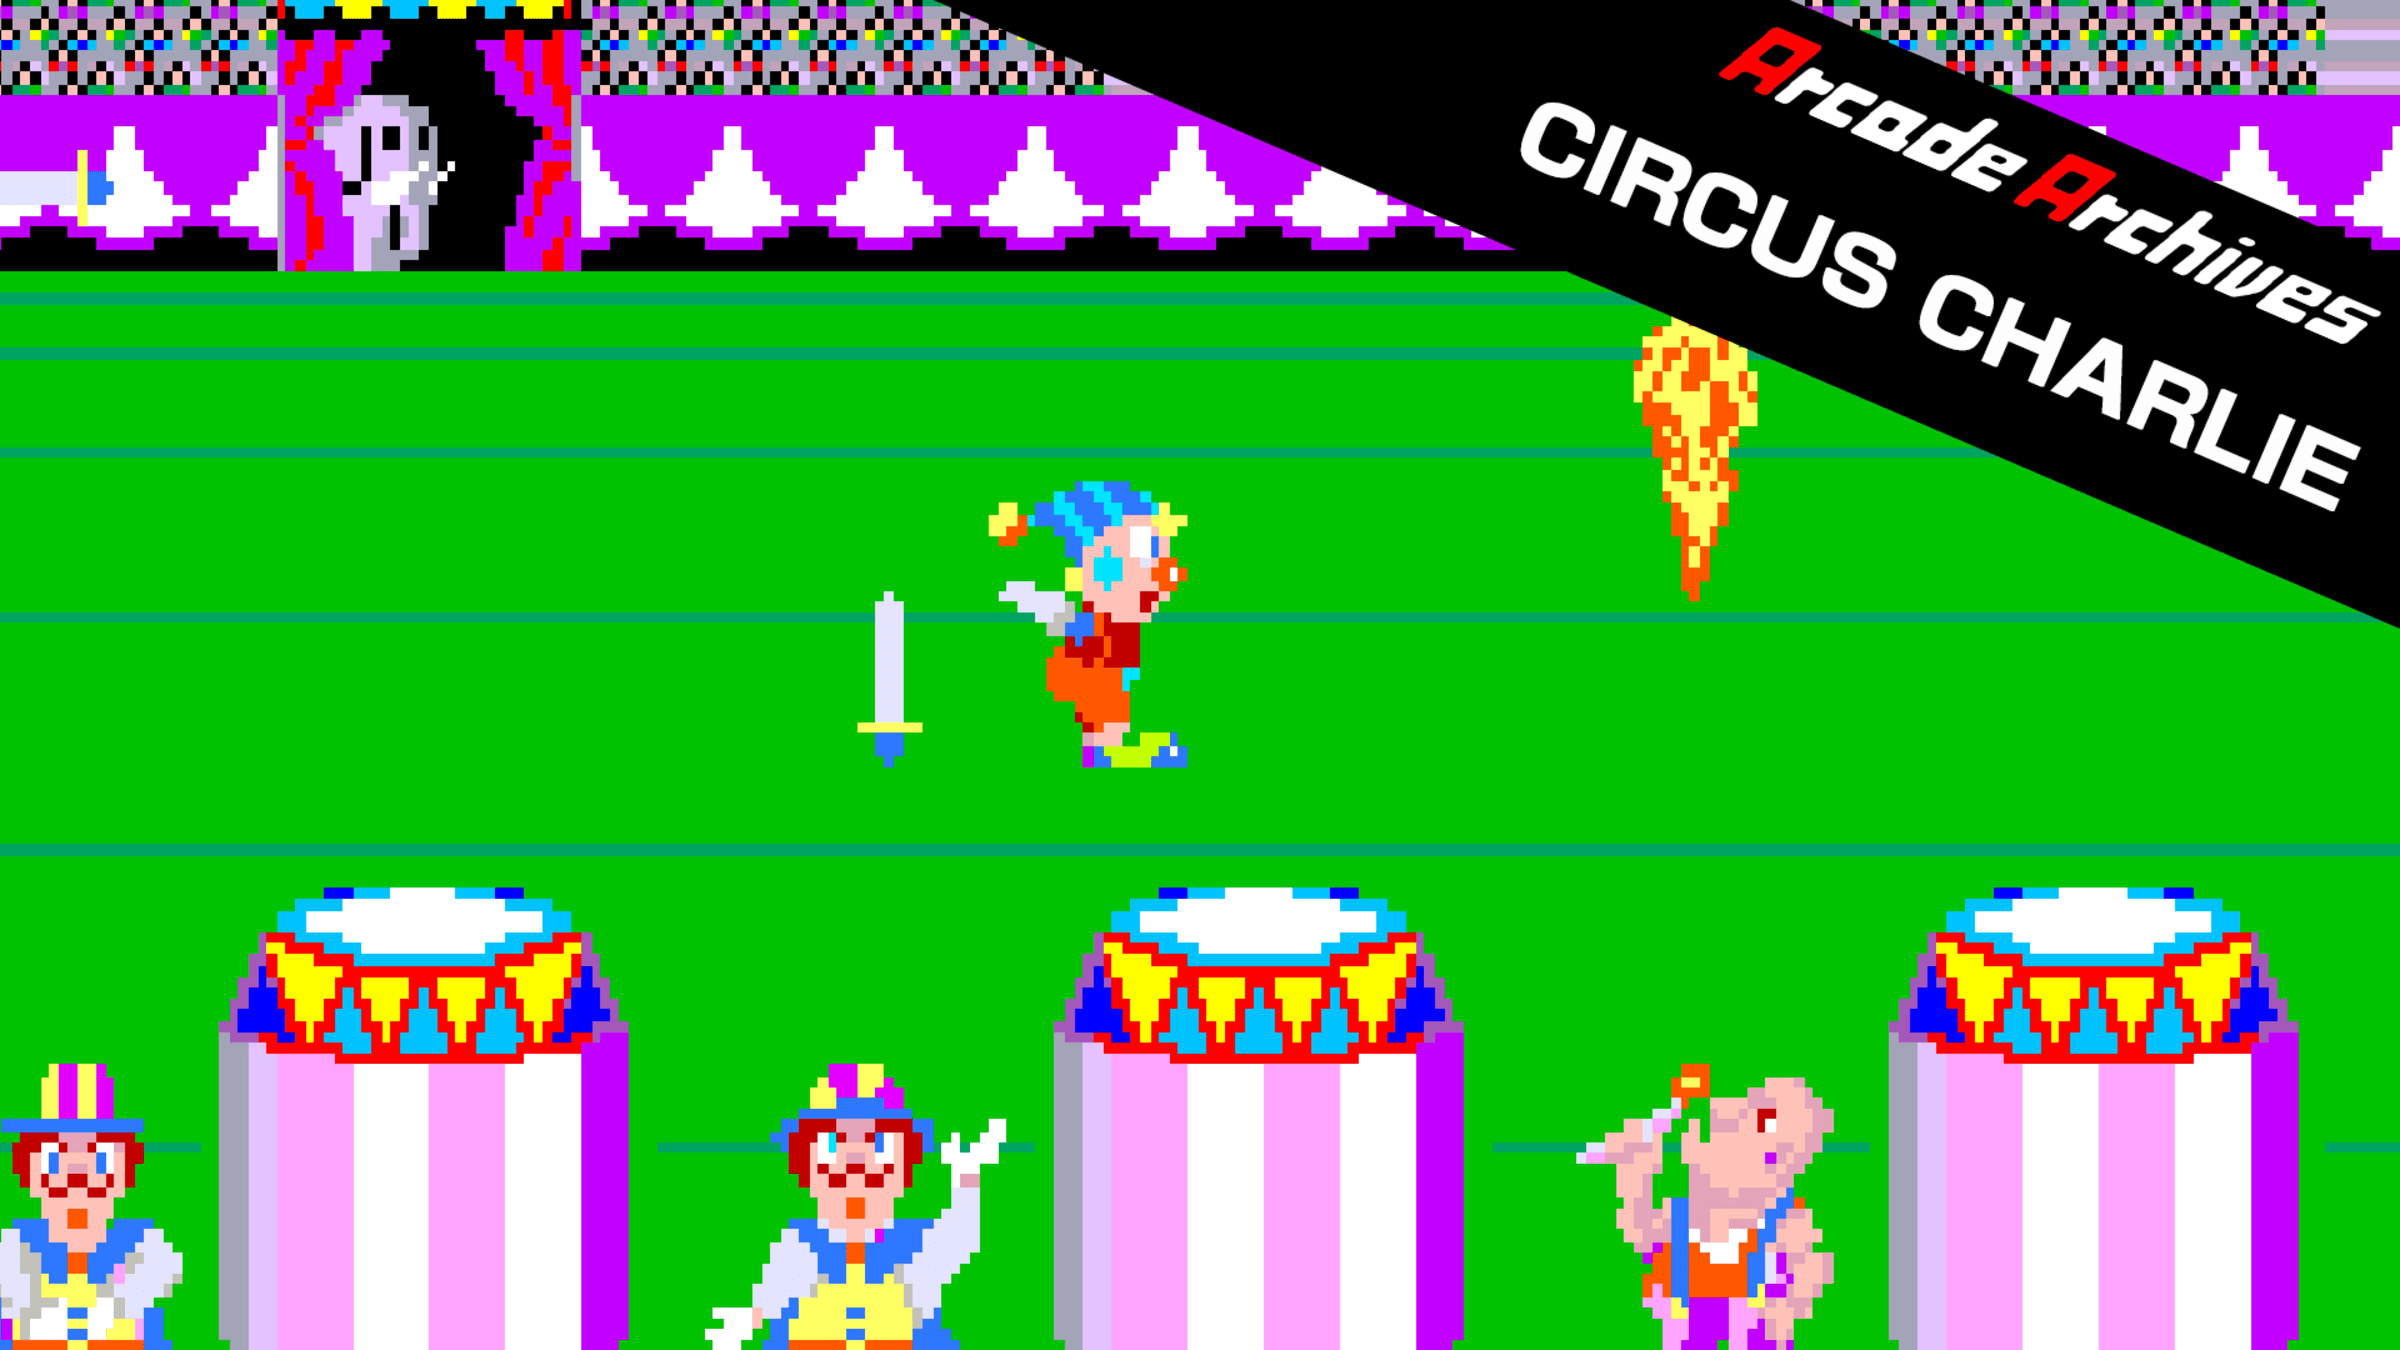 Arcade Machine: Clown Hunt for Nintendo Switch - Nintendo Official Site